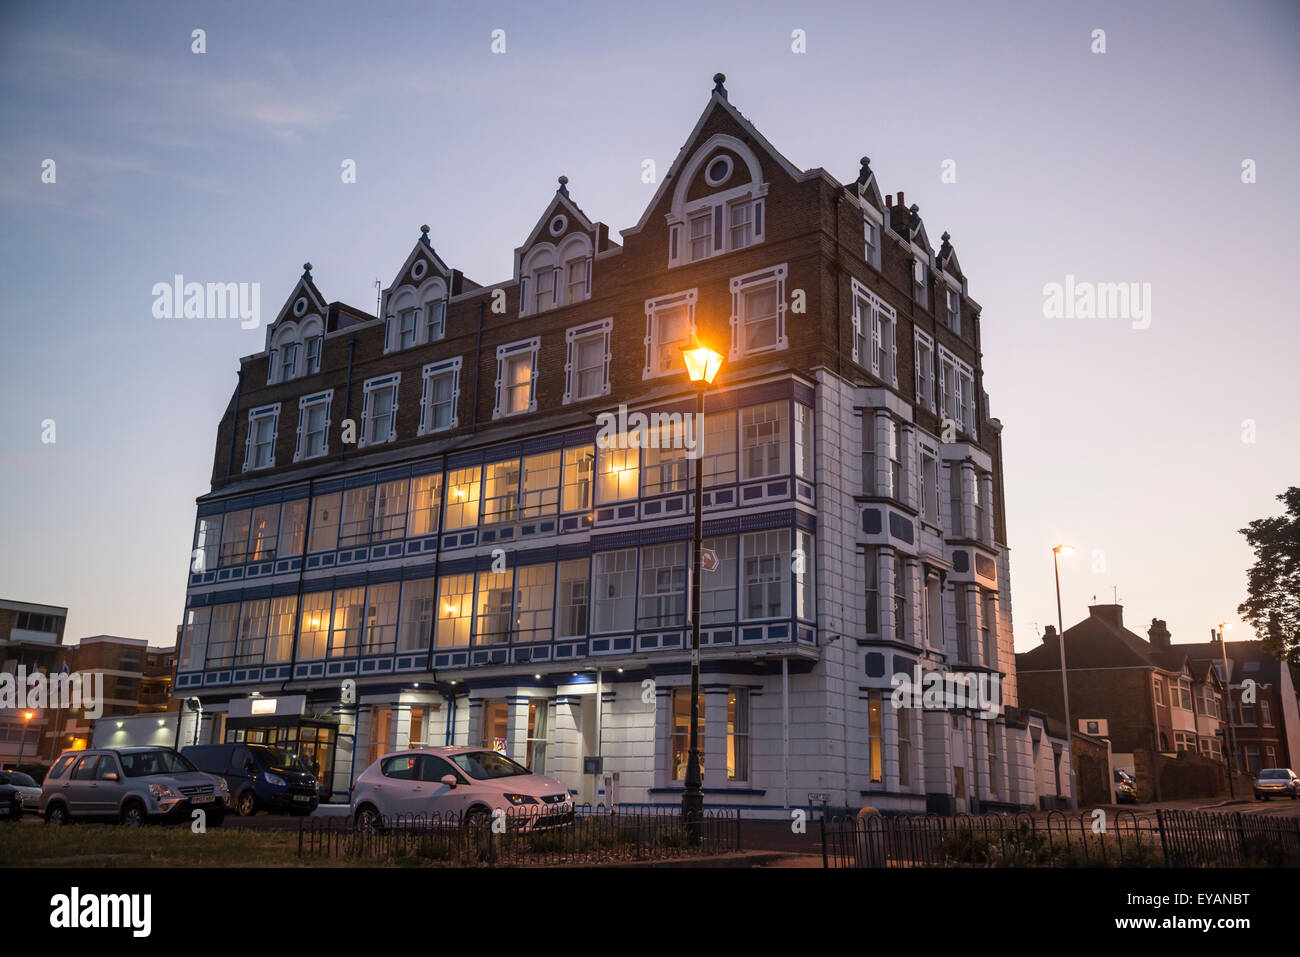 Comfort Inn Hotel, Ramsgate, Kent, England, UK Banque D'Images